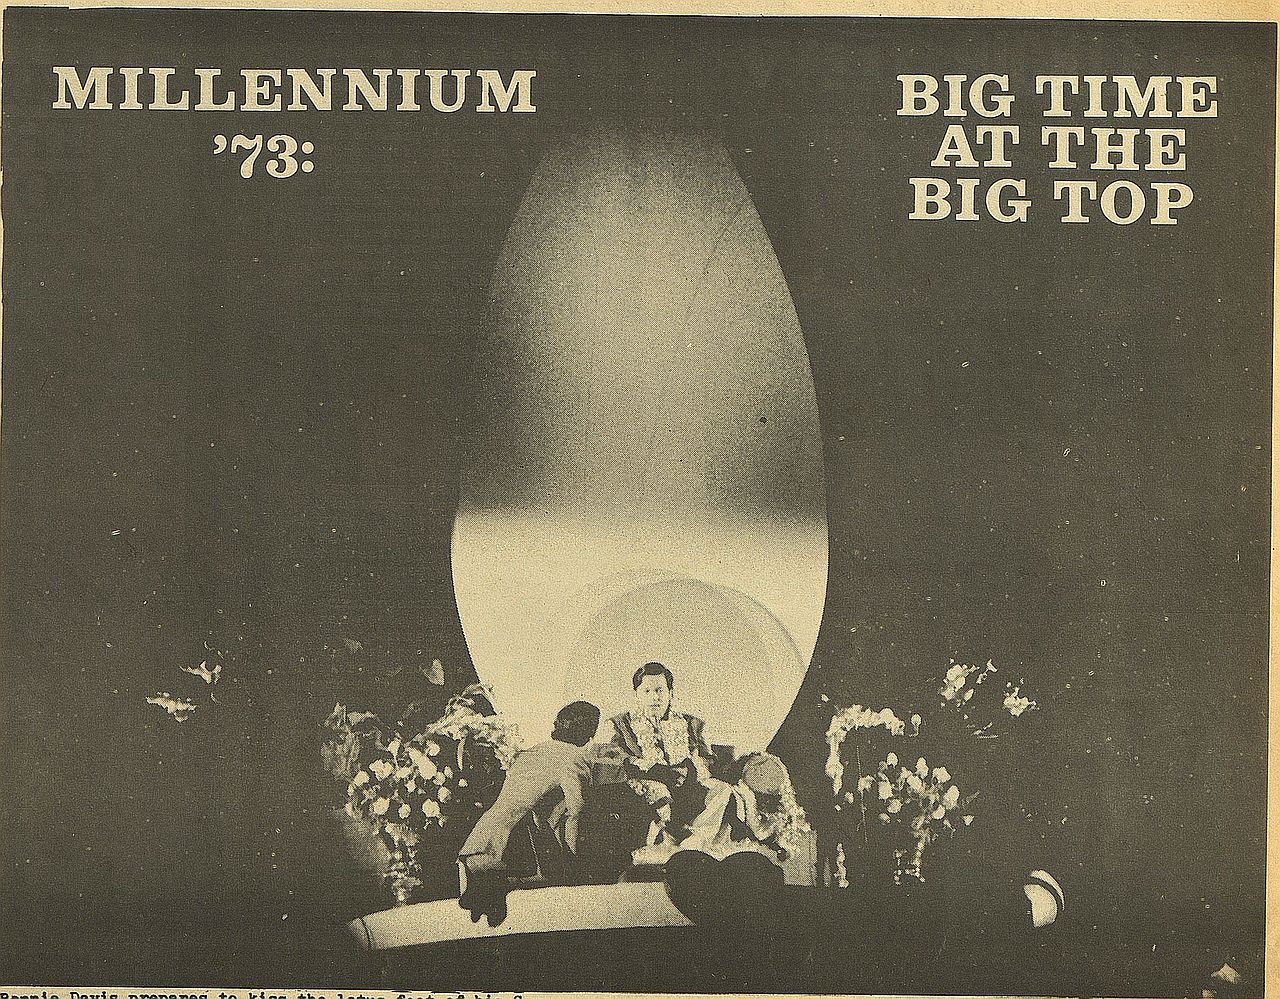 MILLENIUM '73: BIG TIME AT THE BIG TOP